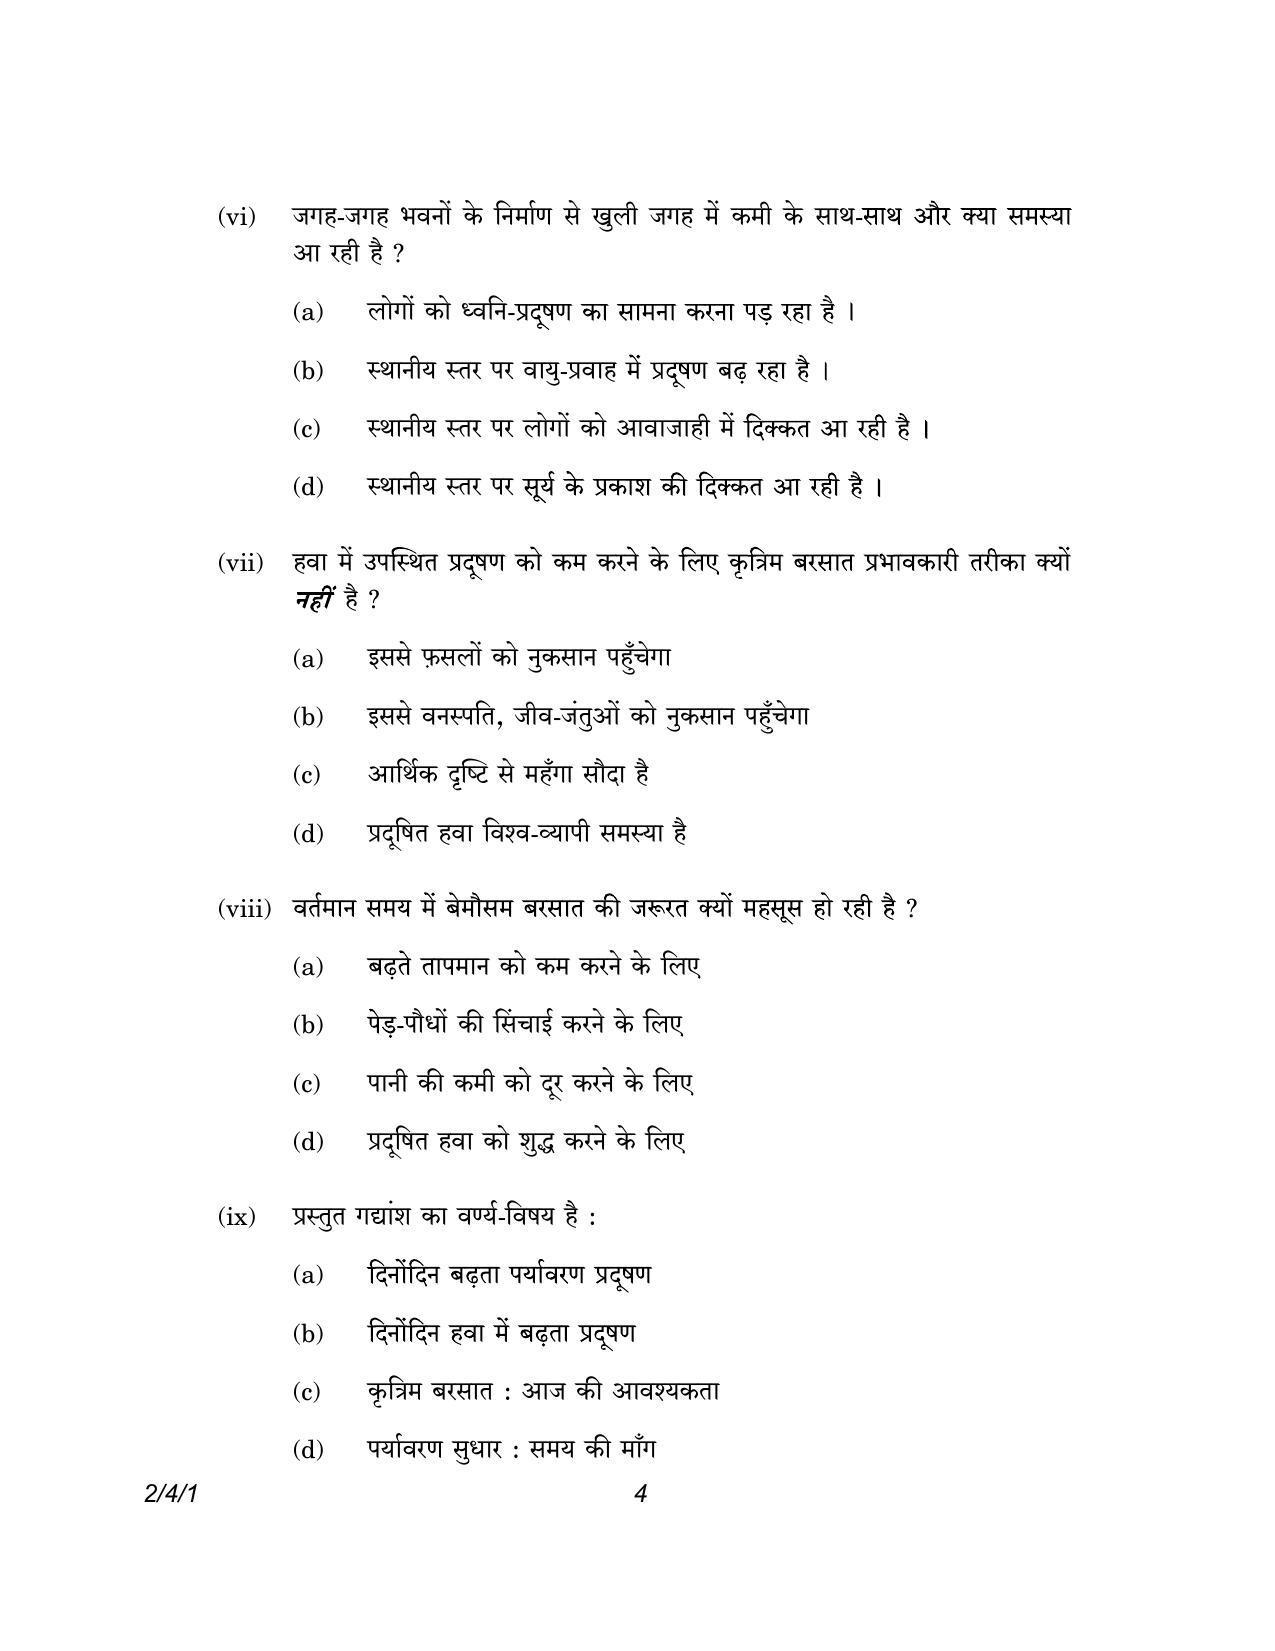 CBSE Class 12 2-4-1 Hindi Core version 2023 Question Paper - Page 4